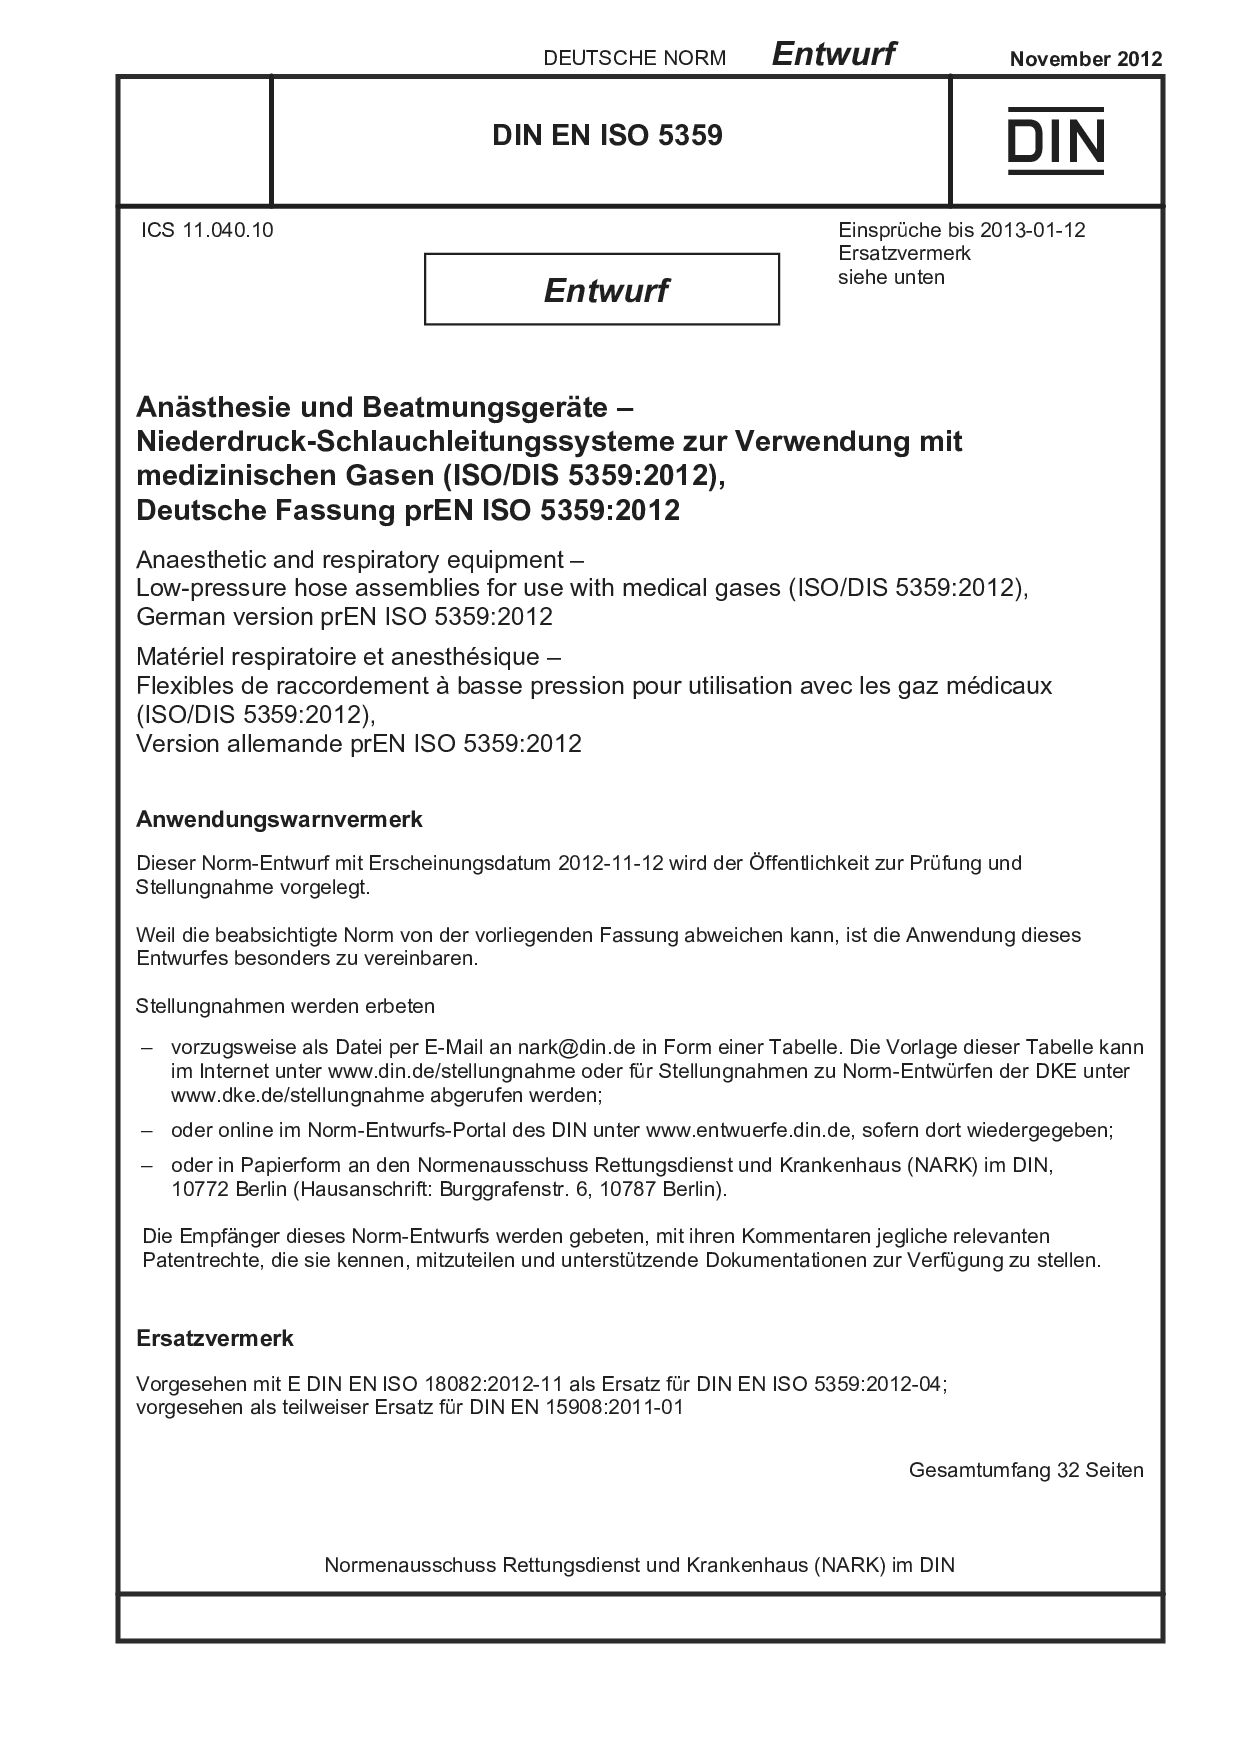 DIN EN ISO 5359 E:2012-11